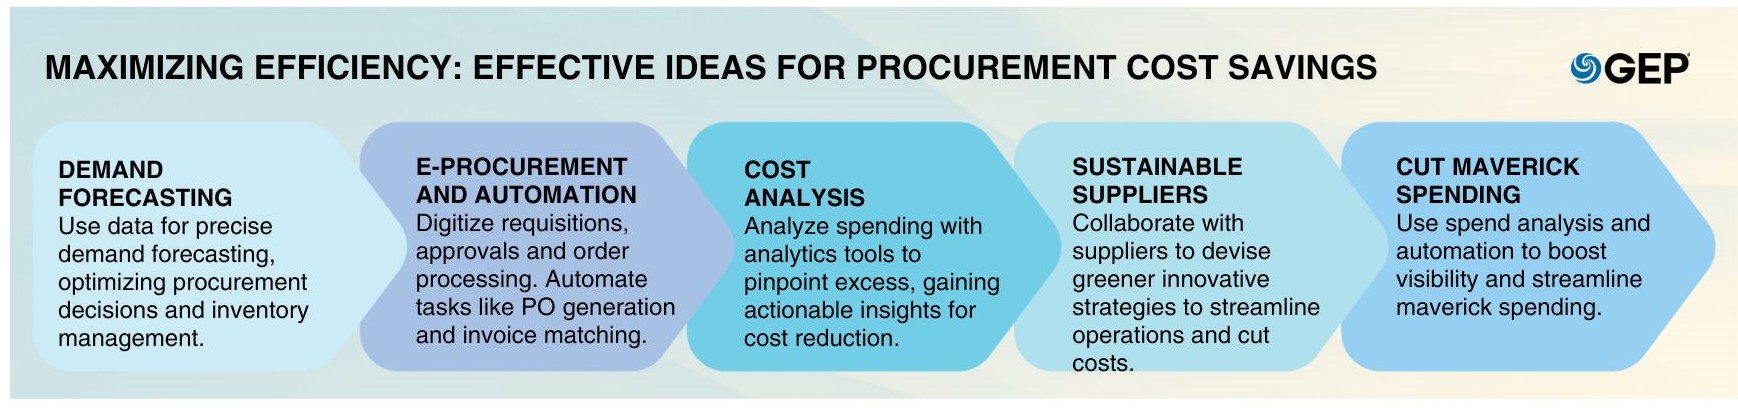 12-procurement-cost-savings-ideas-that-de-will-liver-value-1